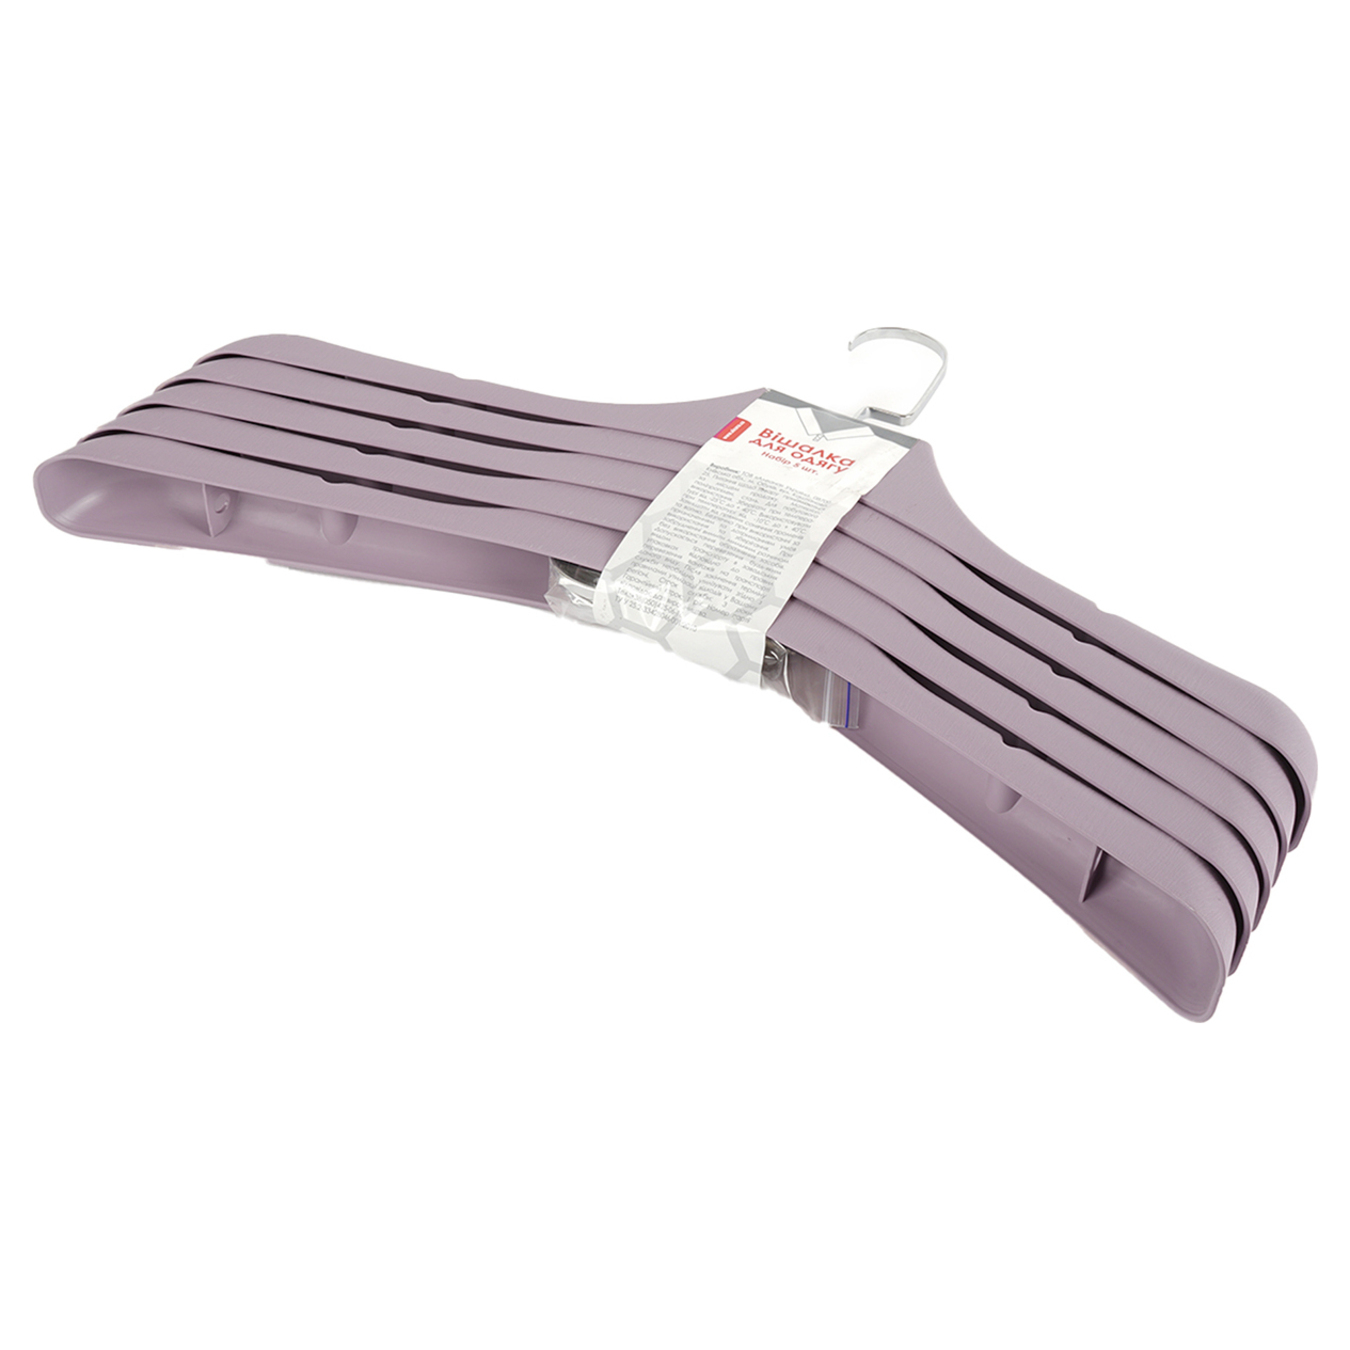 Hanger Aleana plastic large purple 45.5*6cm set of 5pcs 3